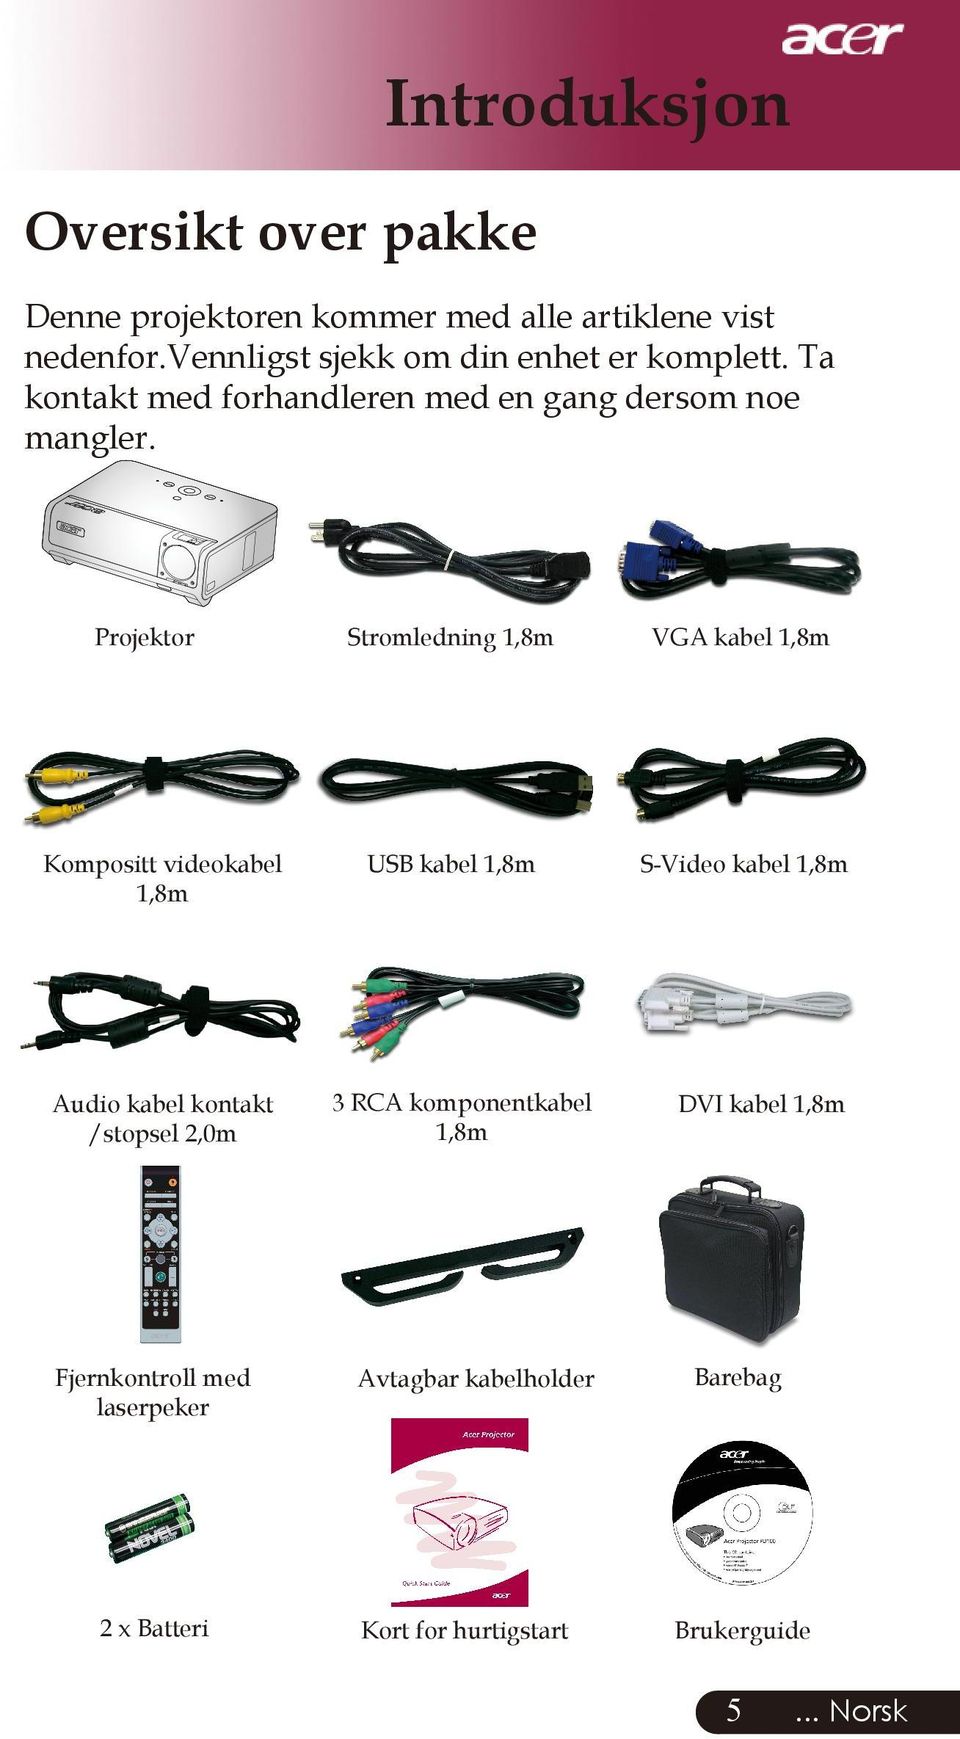 Projektor Kompositt videokabel 1,8m Audio kabel kontakt /stopsel 2,0m Fjernkontroll med laserpeker 2 x Batteri